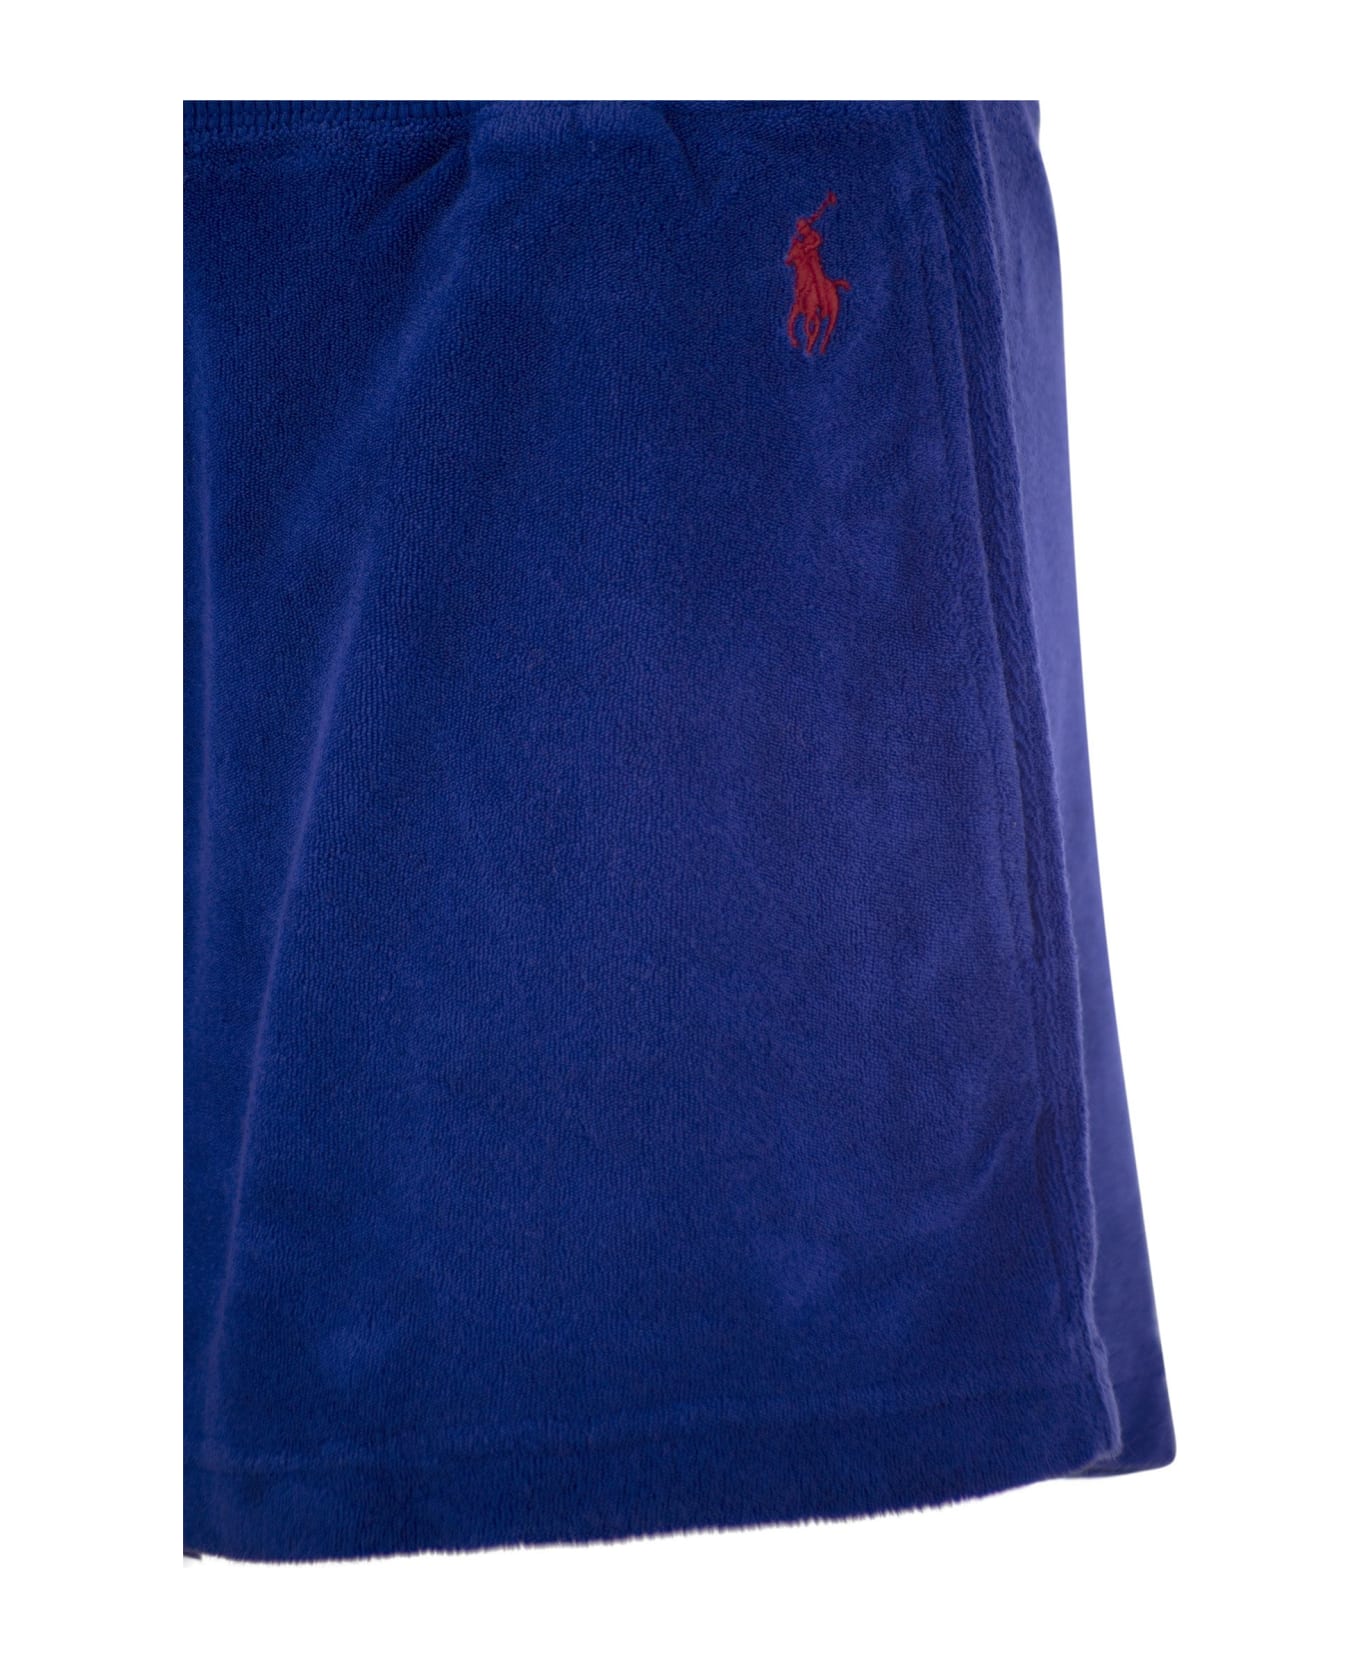 Polo Ralph Lauren Sponge Shorts With Drawstring - Royal Blue